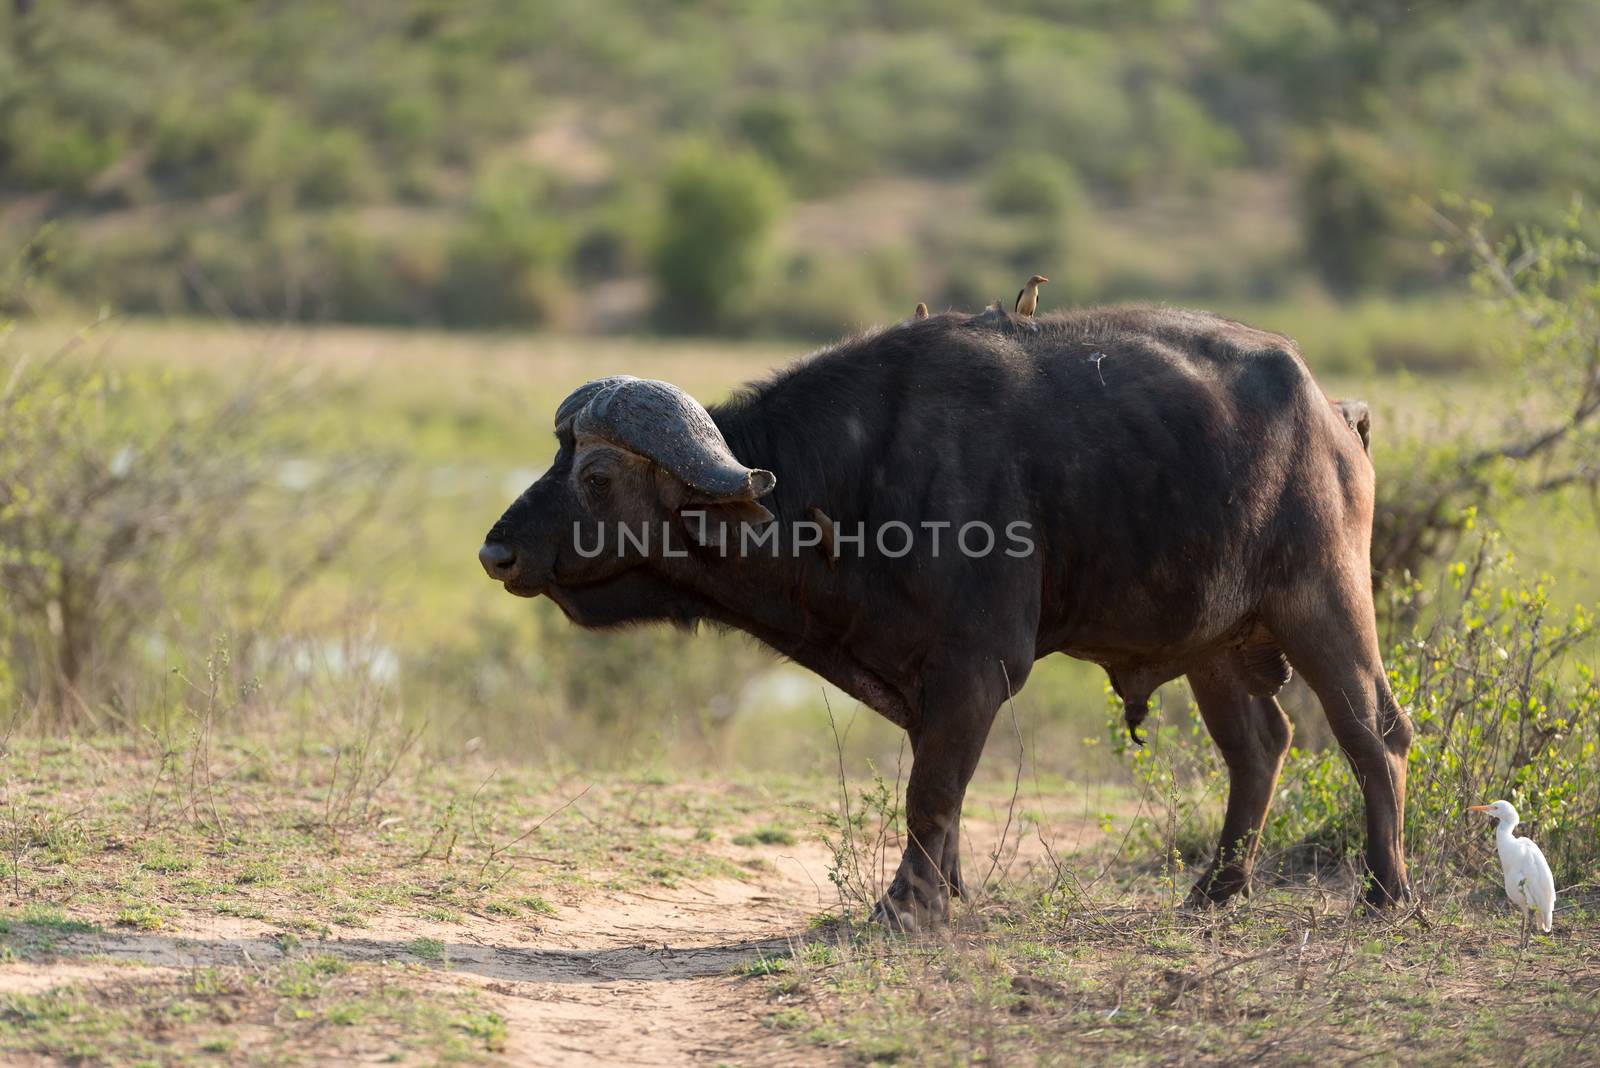 Cape buffalo portrait by ozkanzozmen